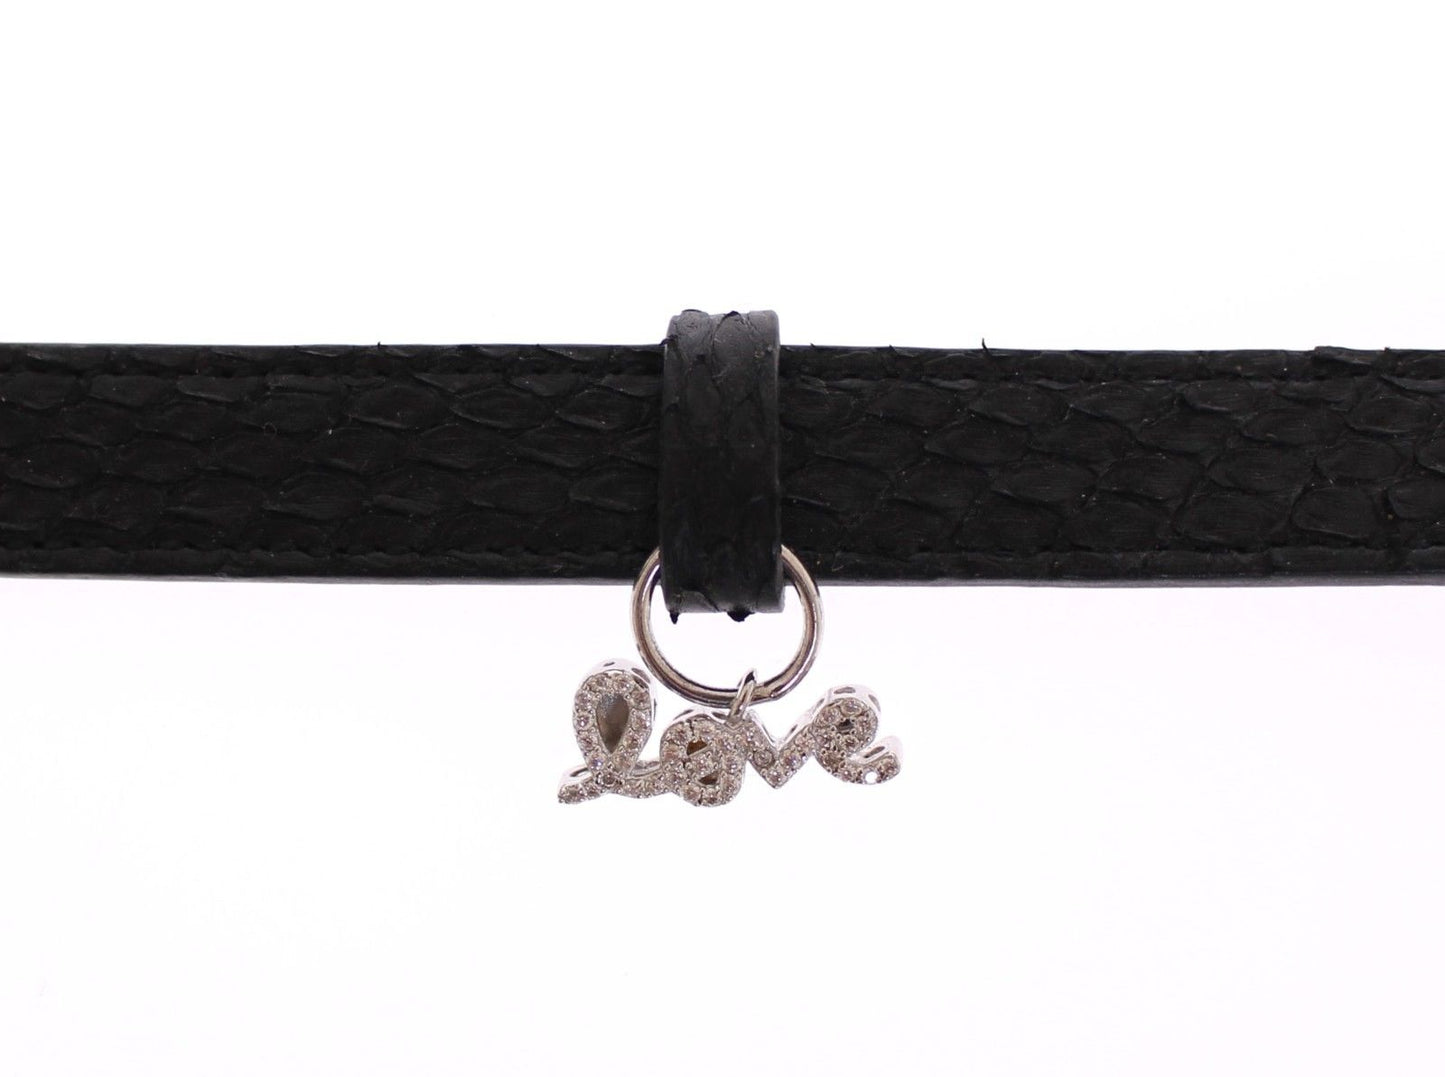 Exquisite Black Snakeskin Silver Bracelet